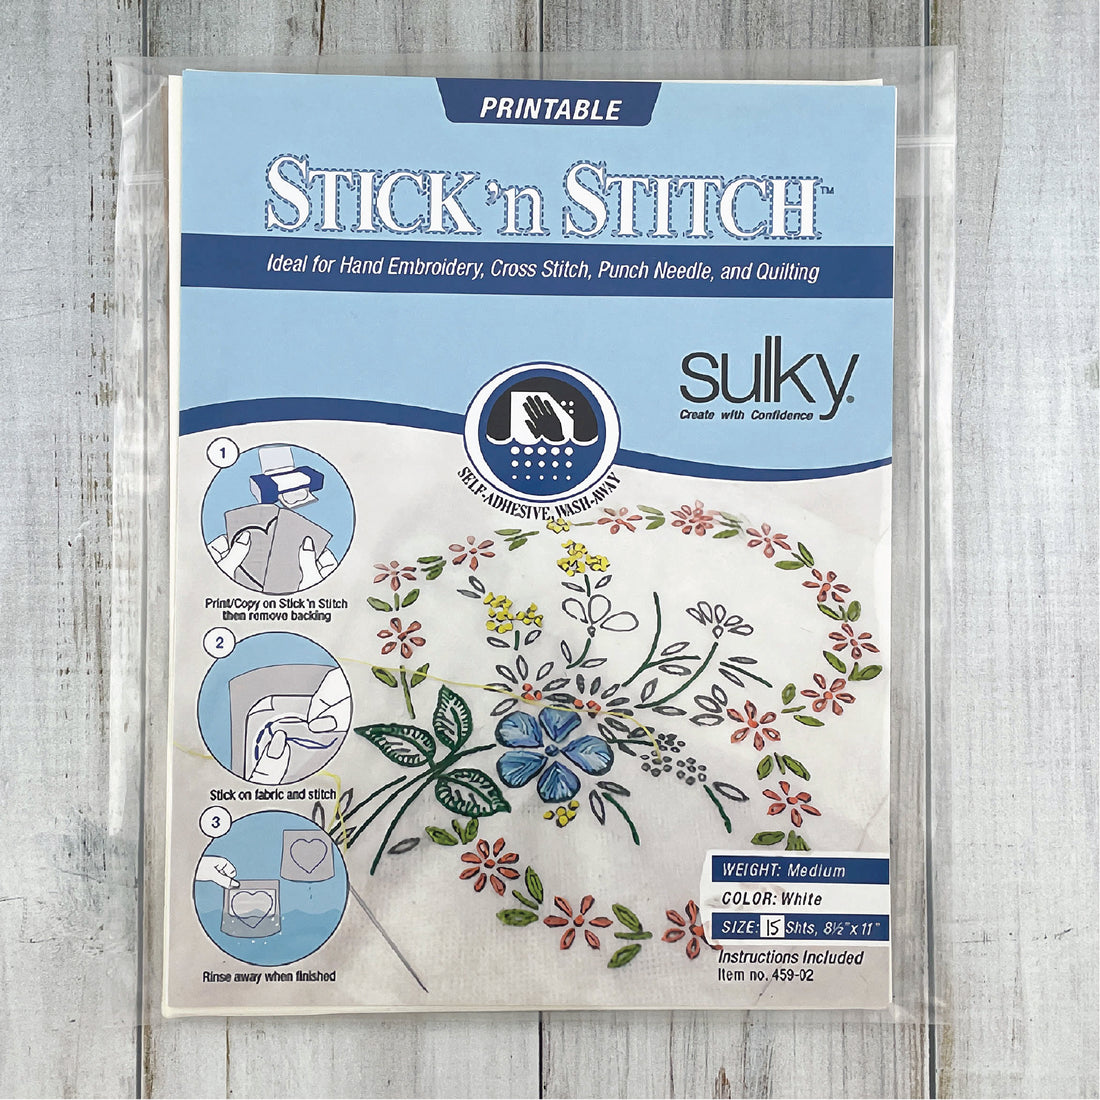 Printable Sticky Fabri-Solvy (Sulky Brand) Flat Rate